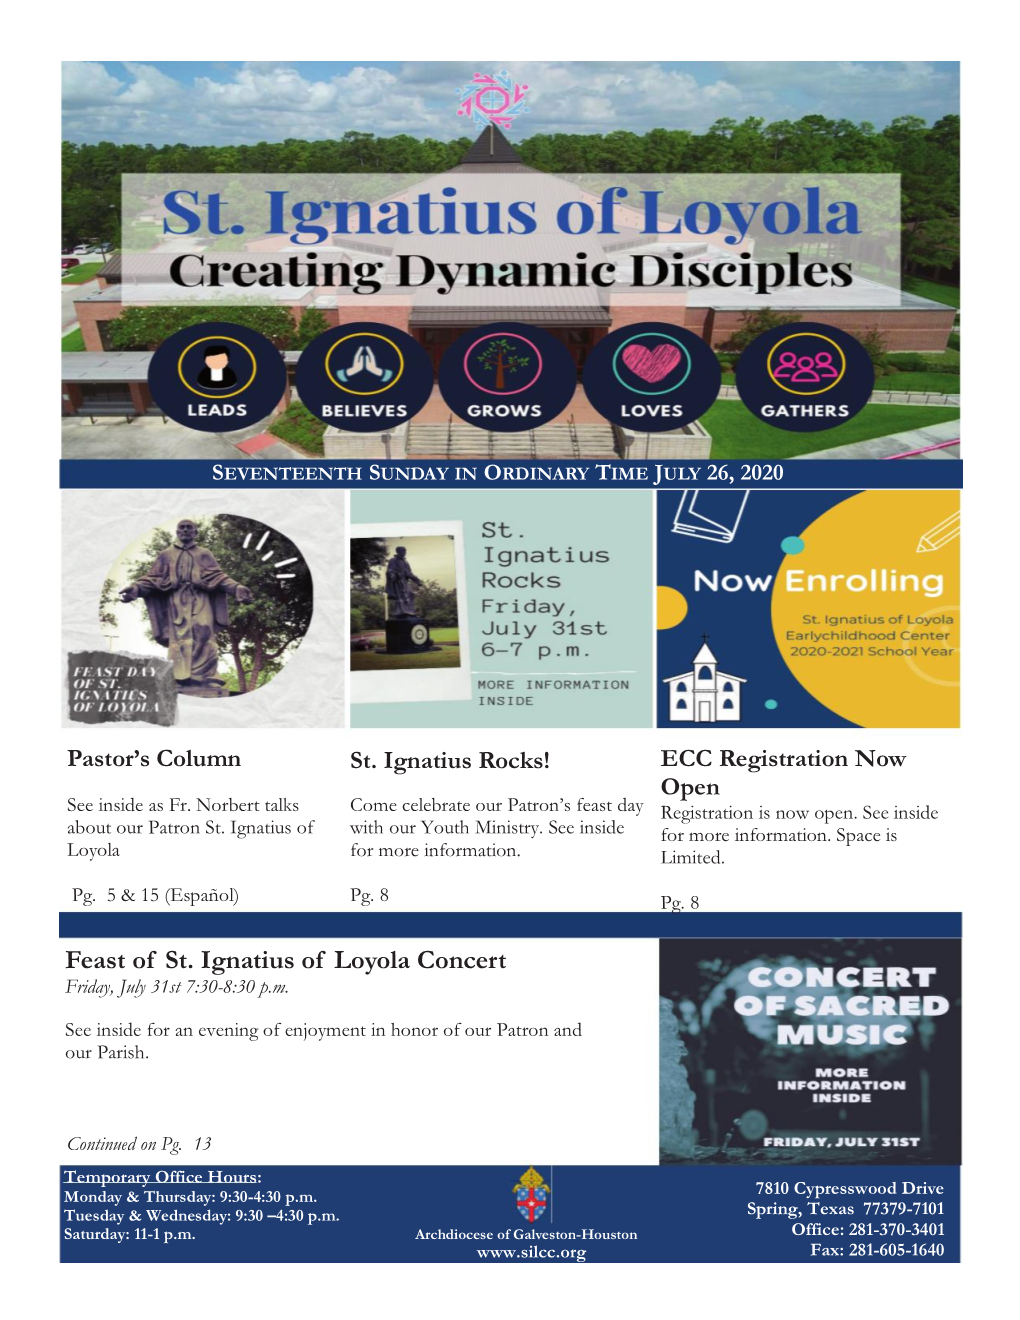 Feast of St. Ignatius of Loyola Concert Friday, July 31St 7:30-8:30 P.M